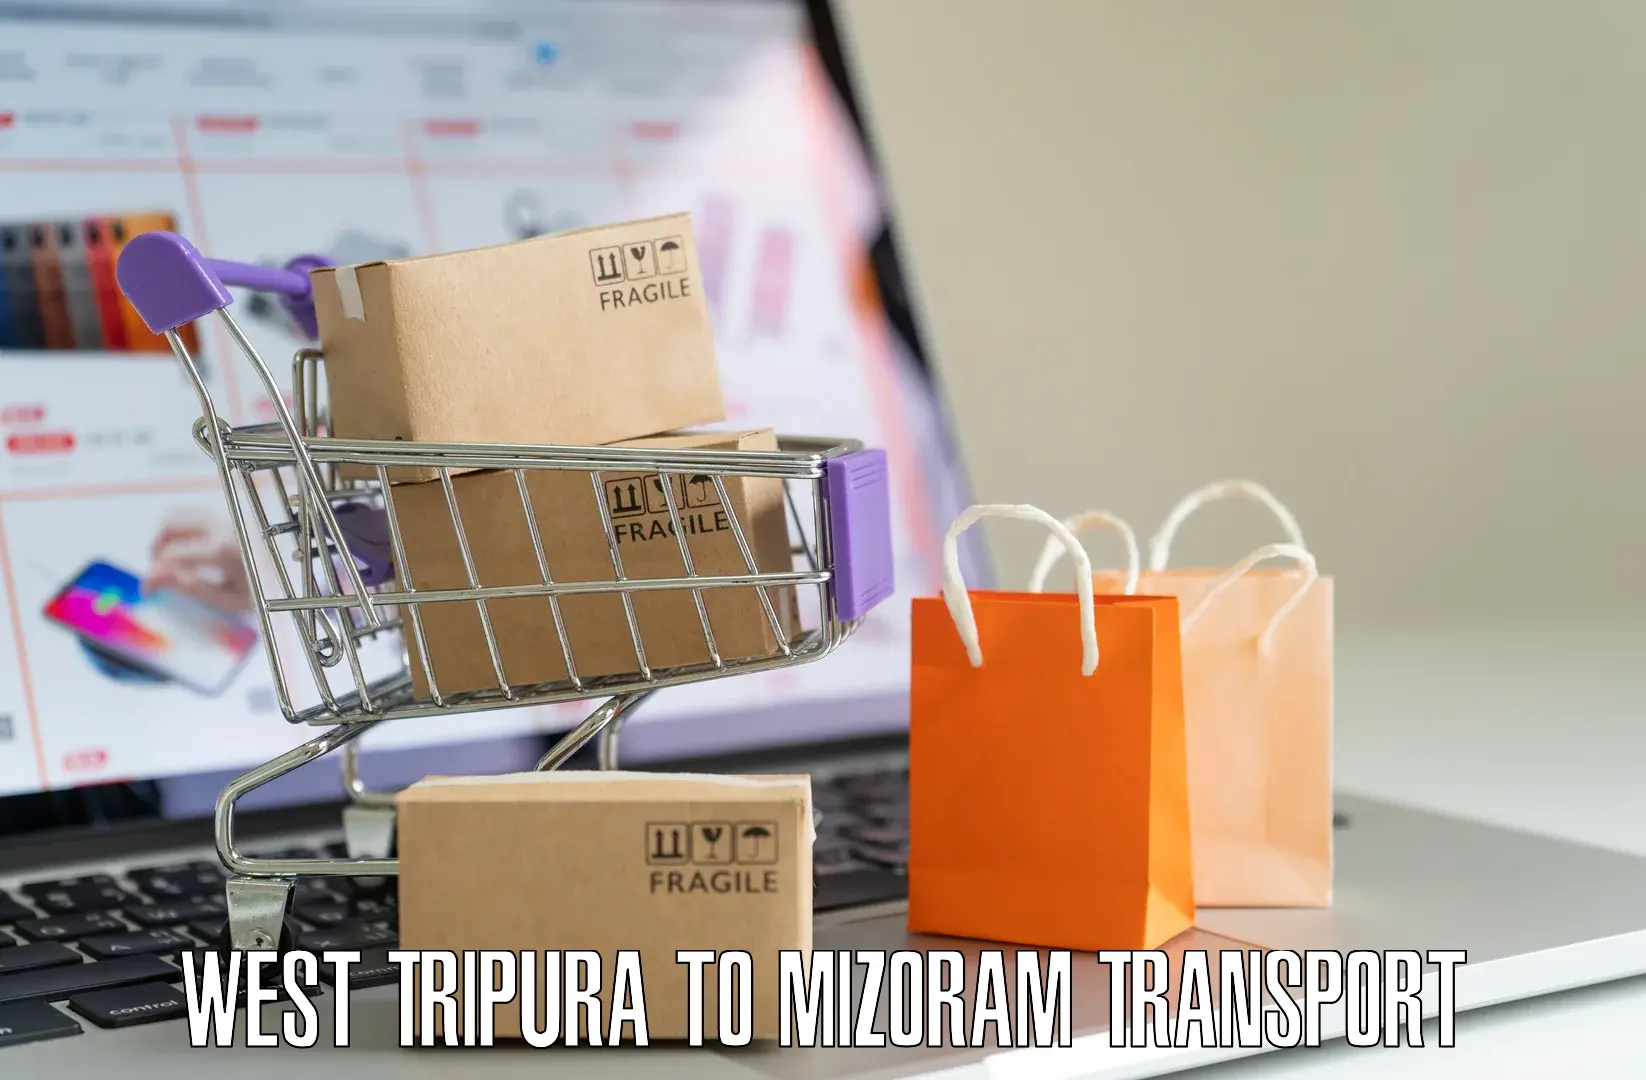 Online transport service West Tripura to Mizoram